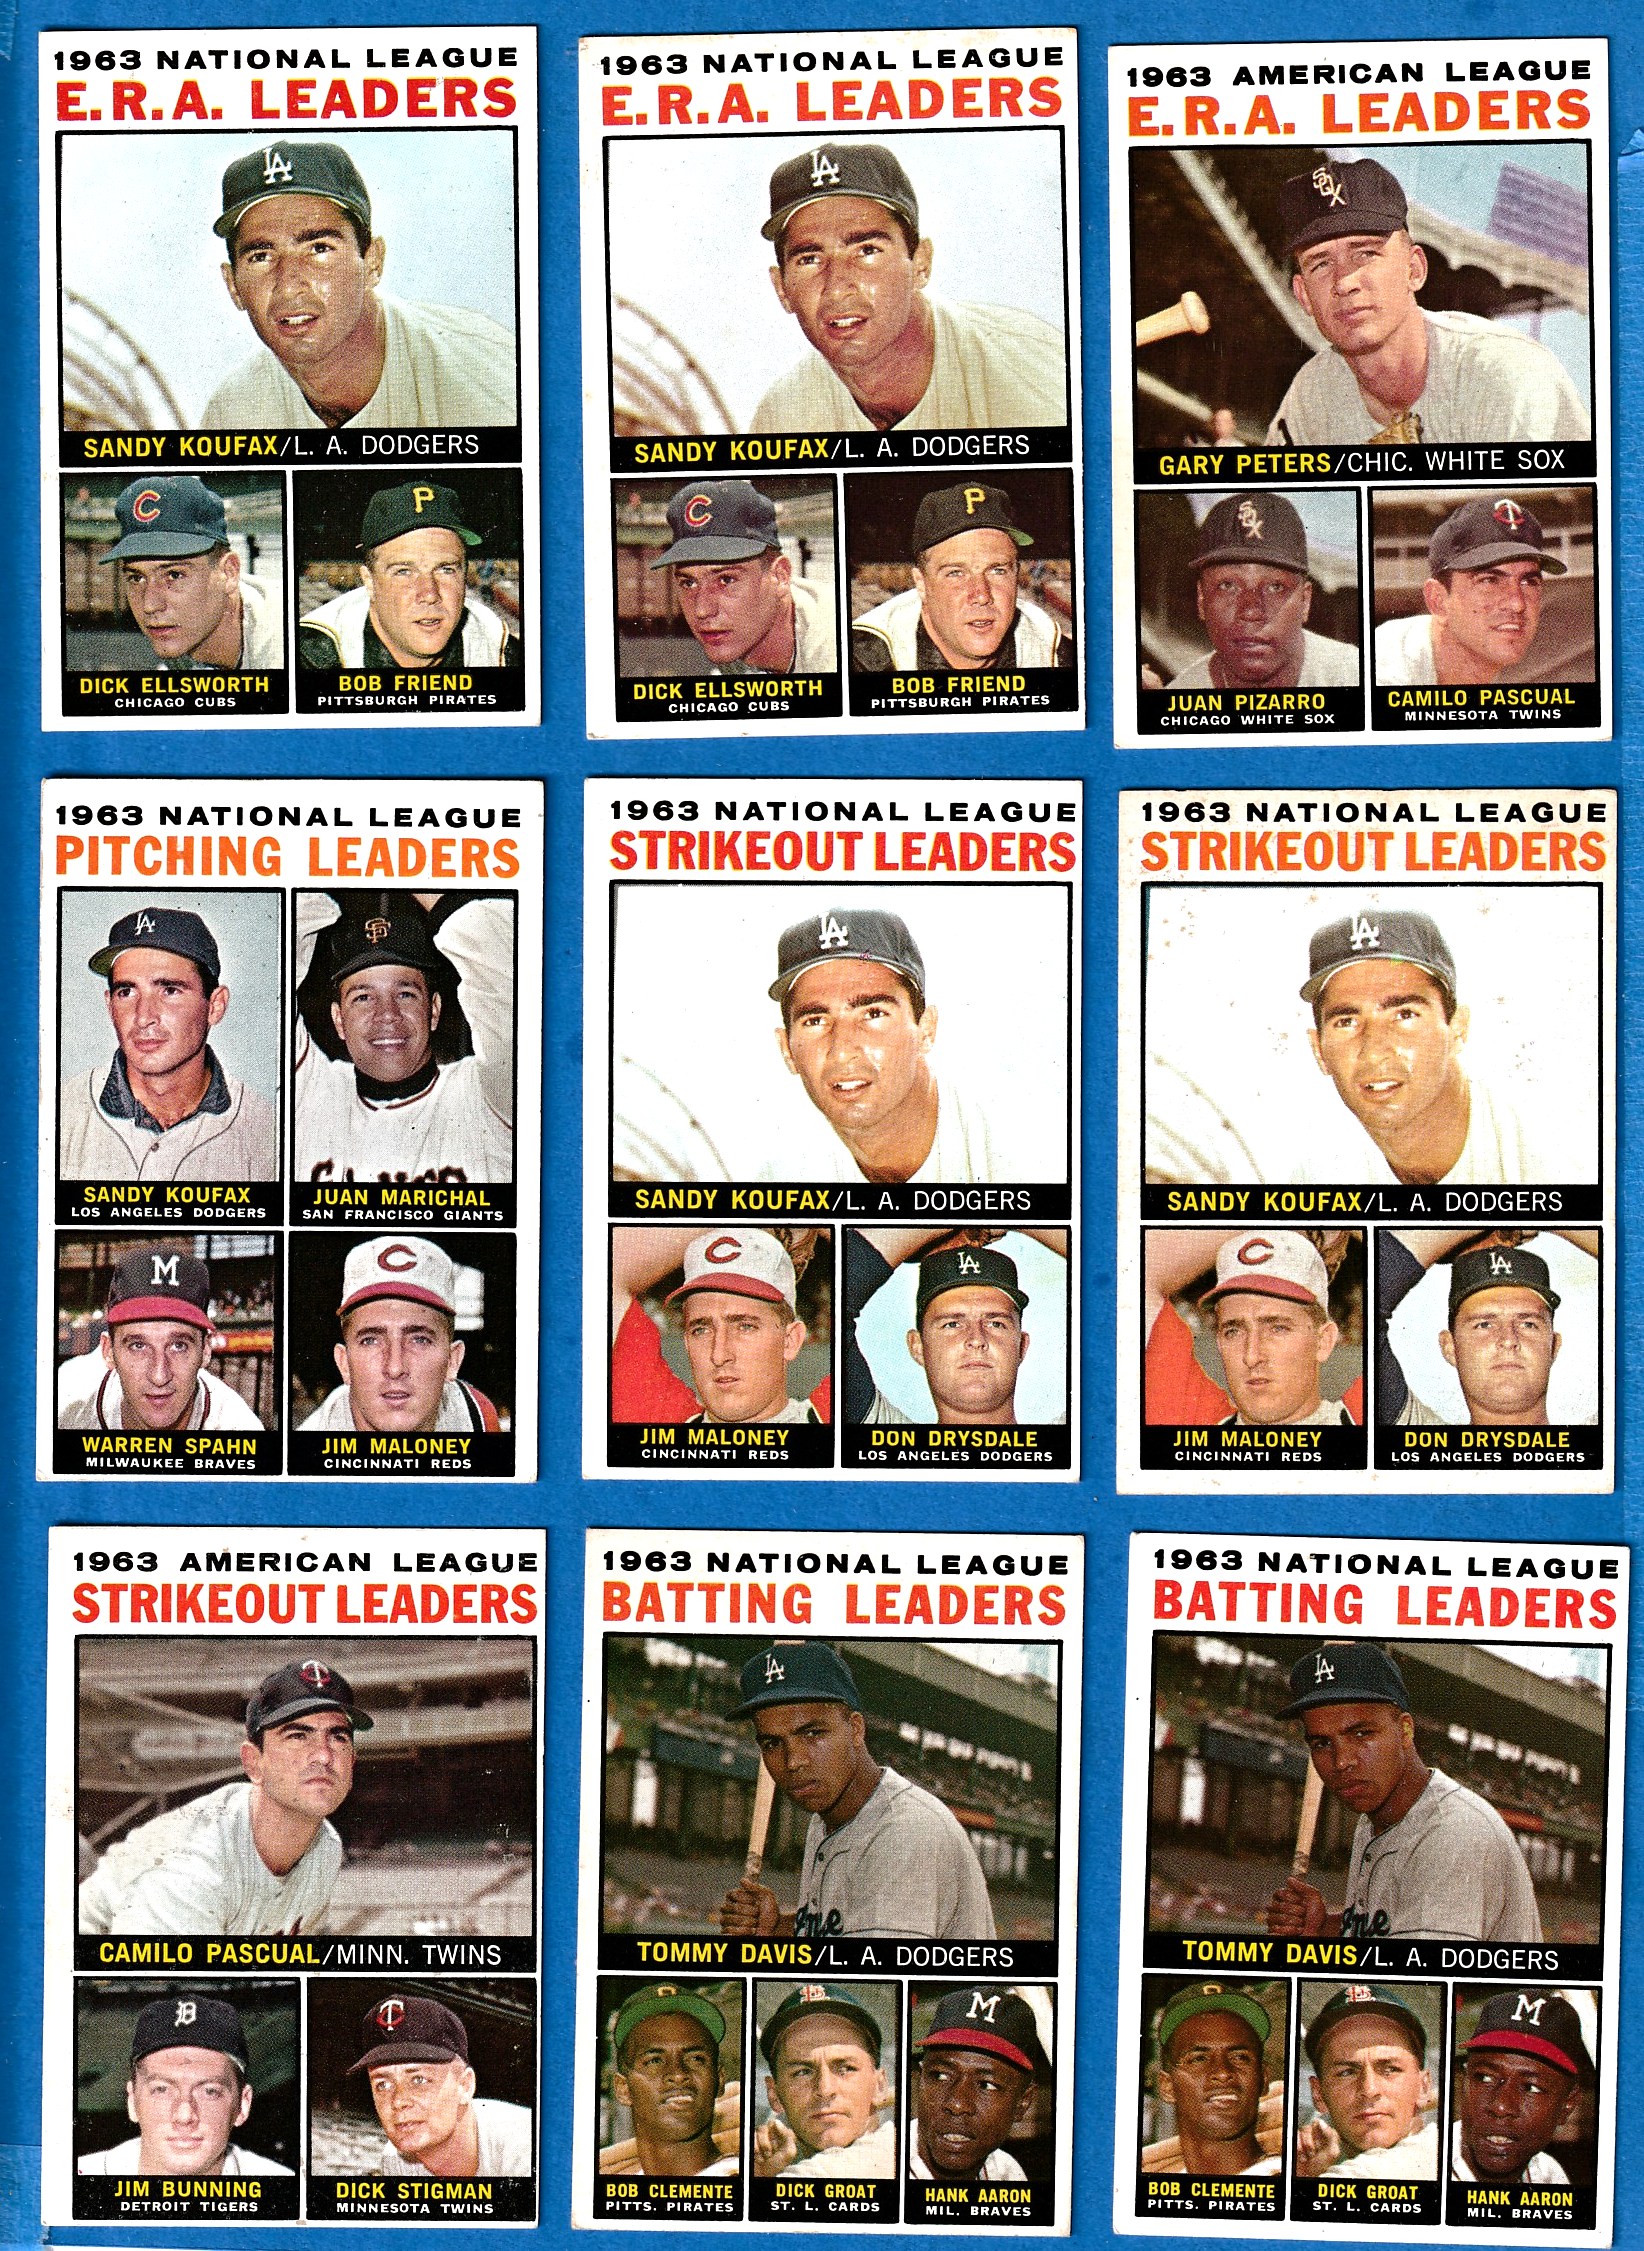 1964 Topps #  1 N.L. ERA Leaders (Sandy Koufax,Dick Ellsworth) [#x] Baseball cards value